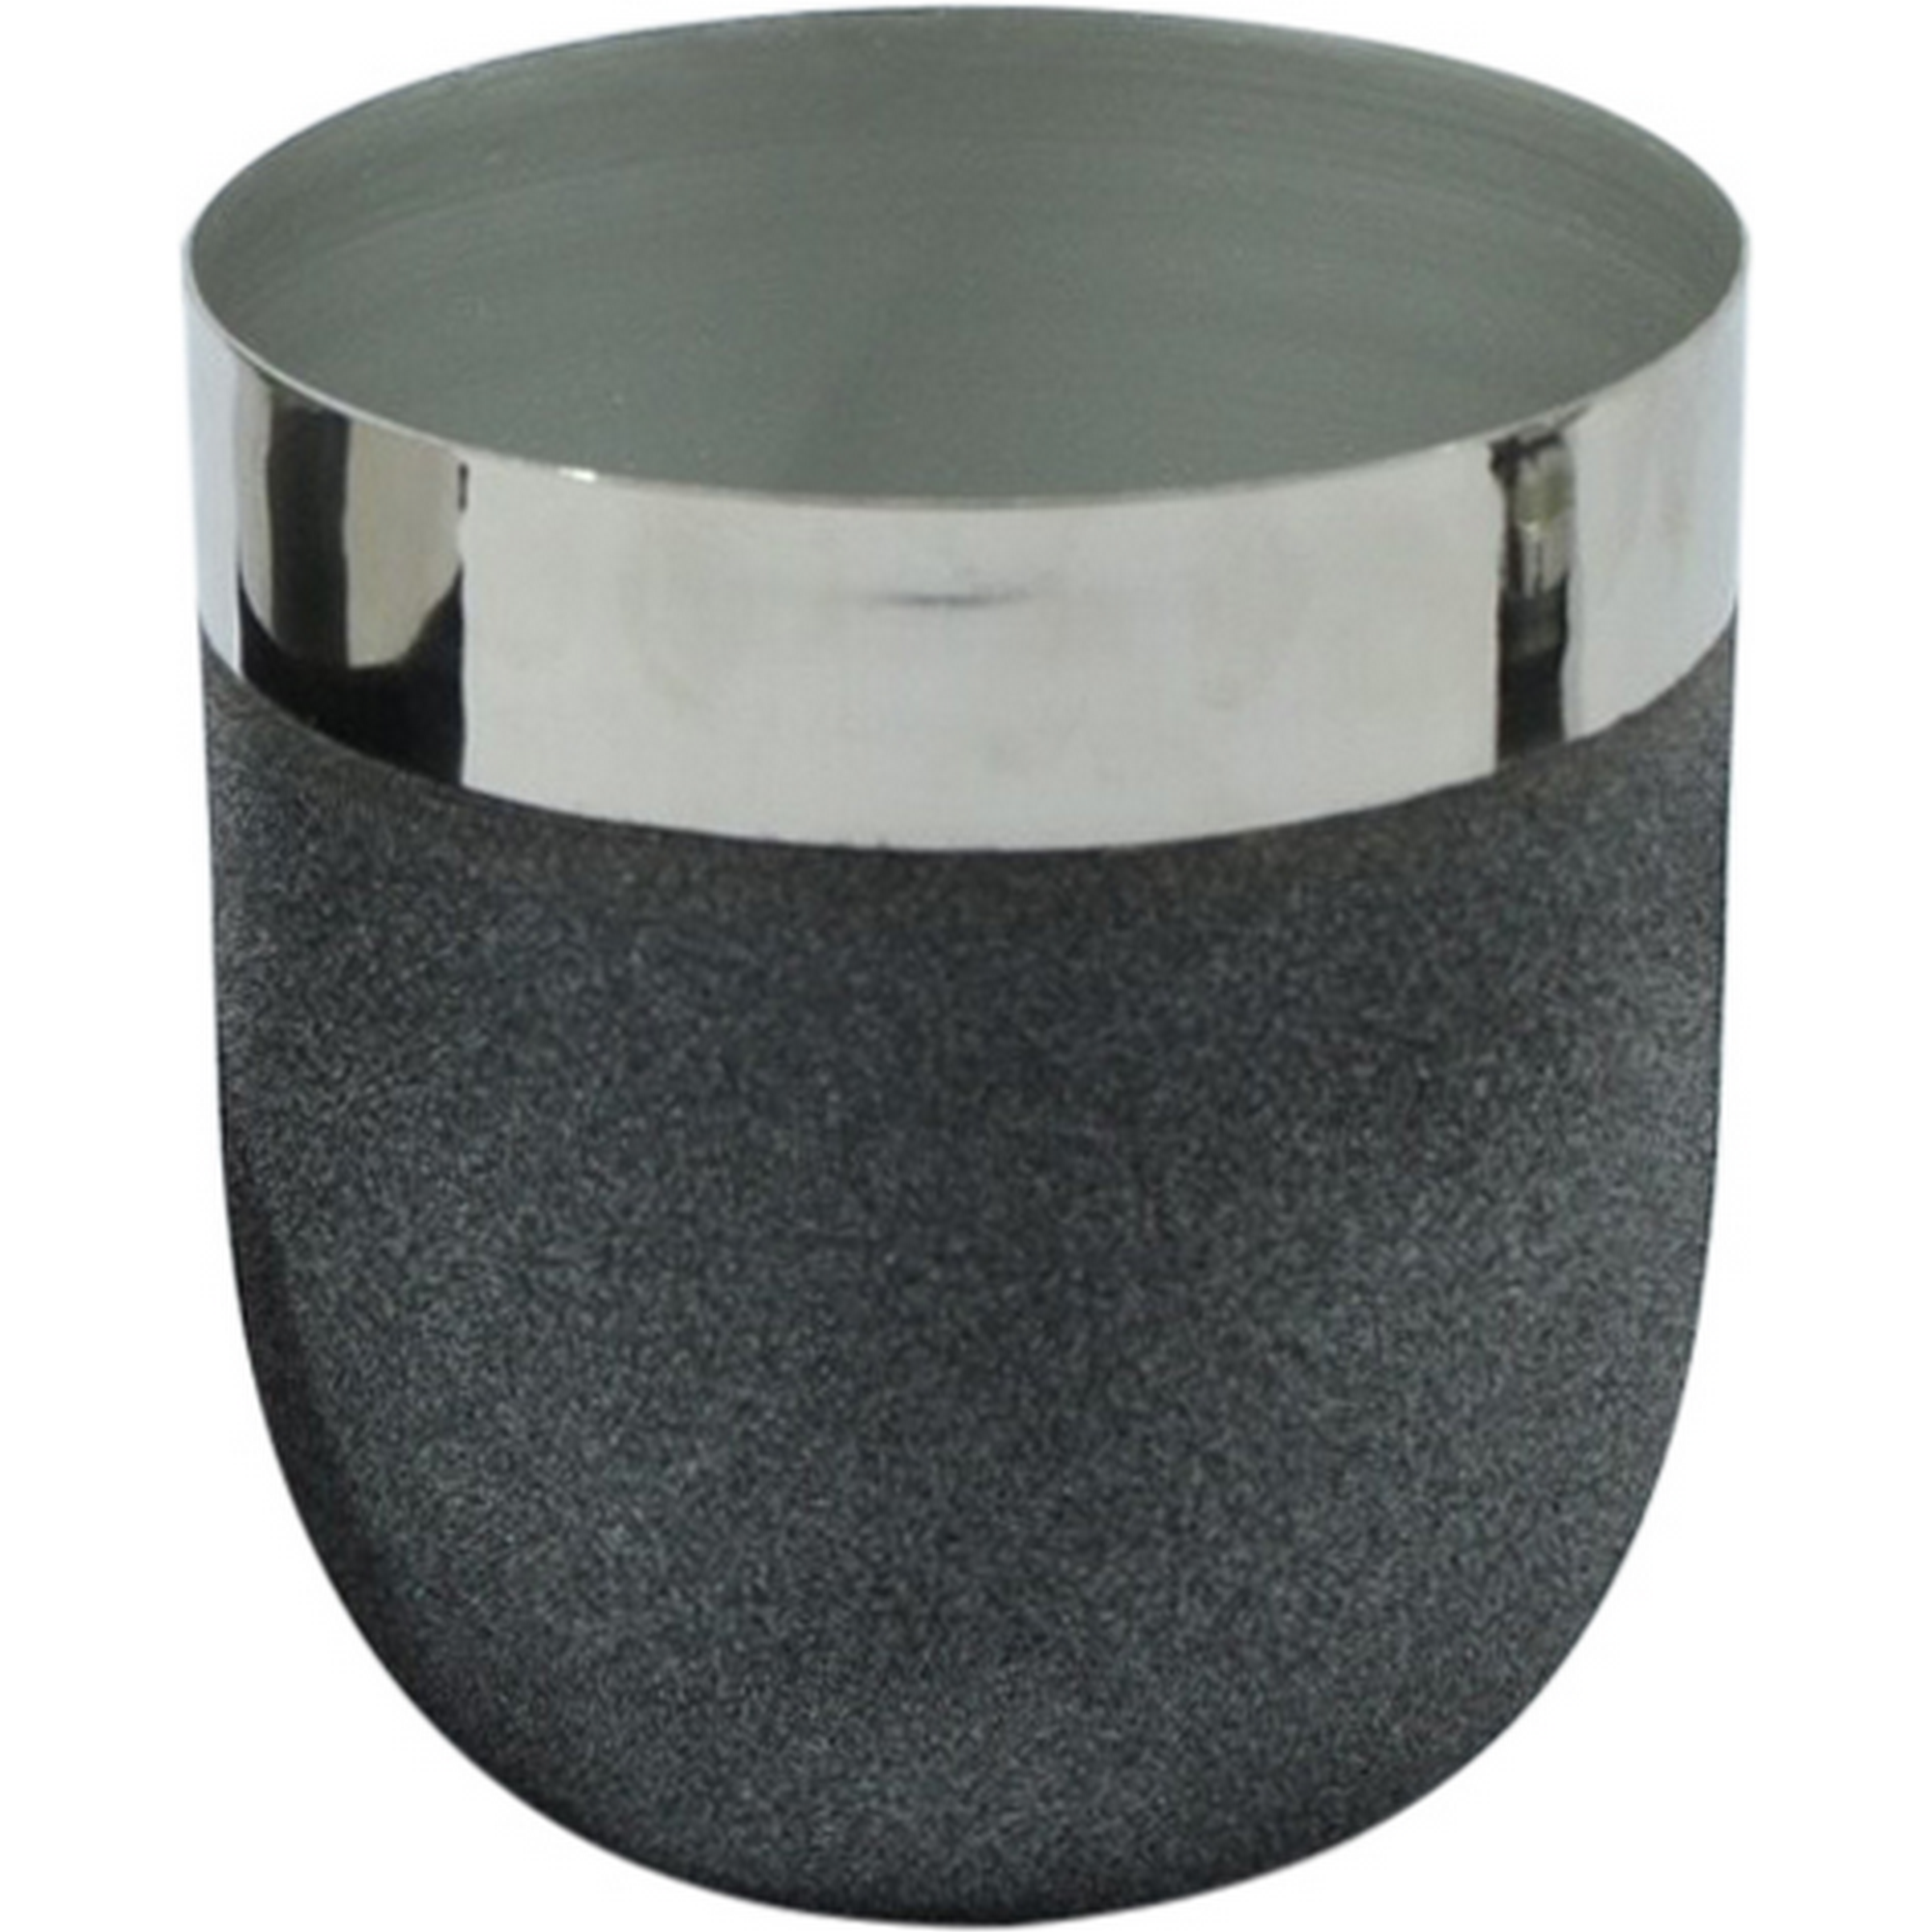 Metallübertopf lackiert grau mit Silberrand 13 x 13 cm + product picture